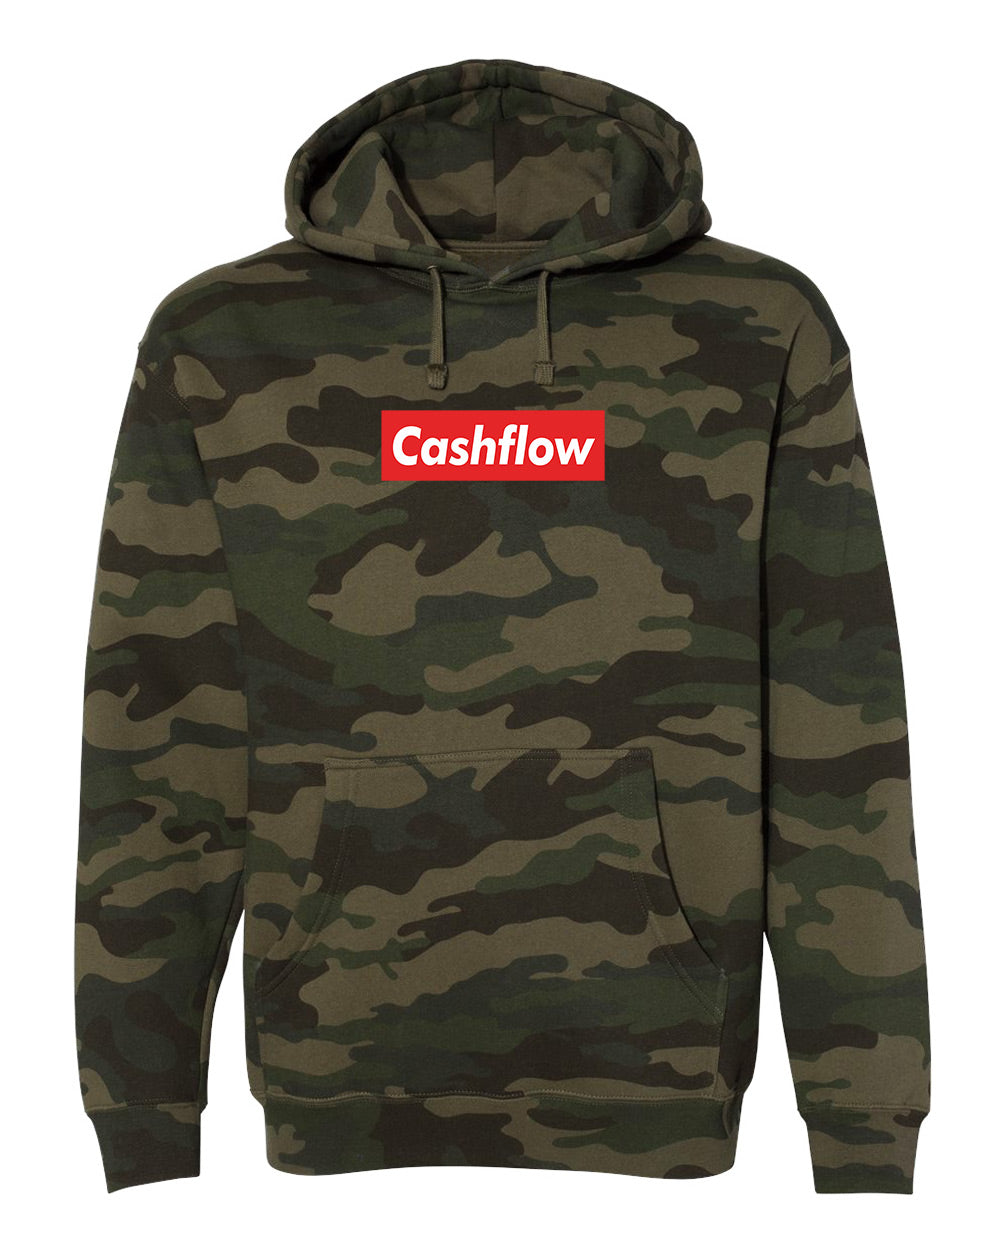 Cashflow Premium Hoodie- Camo